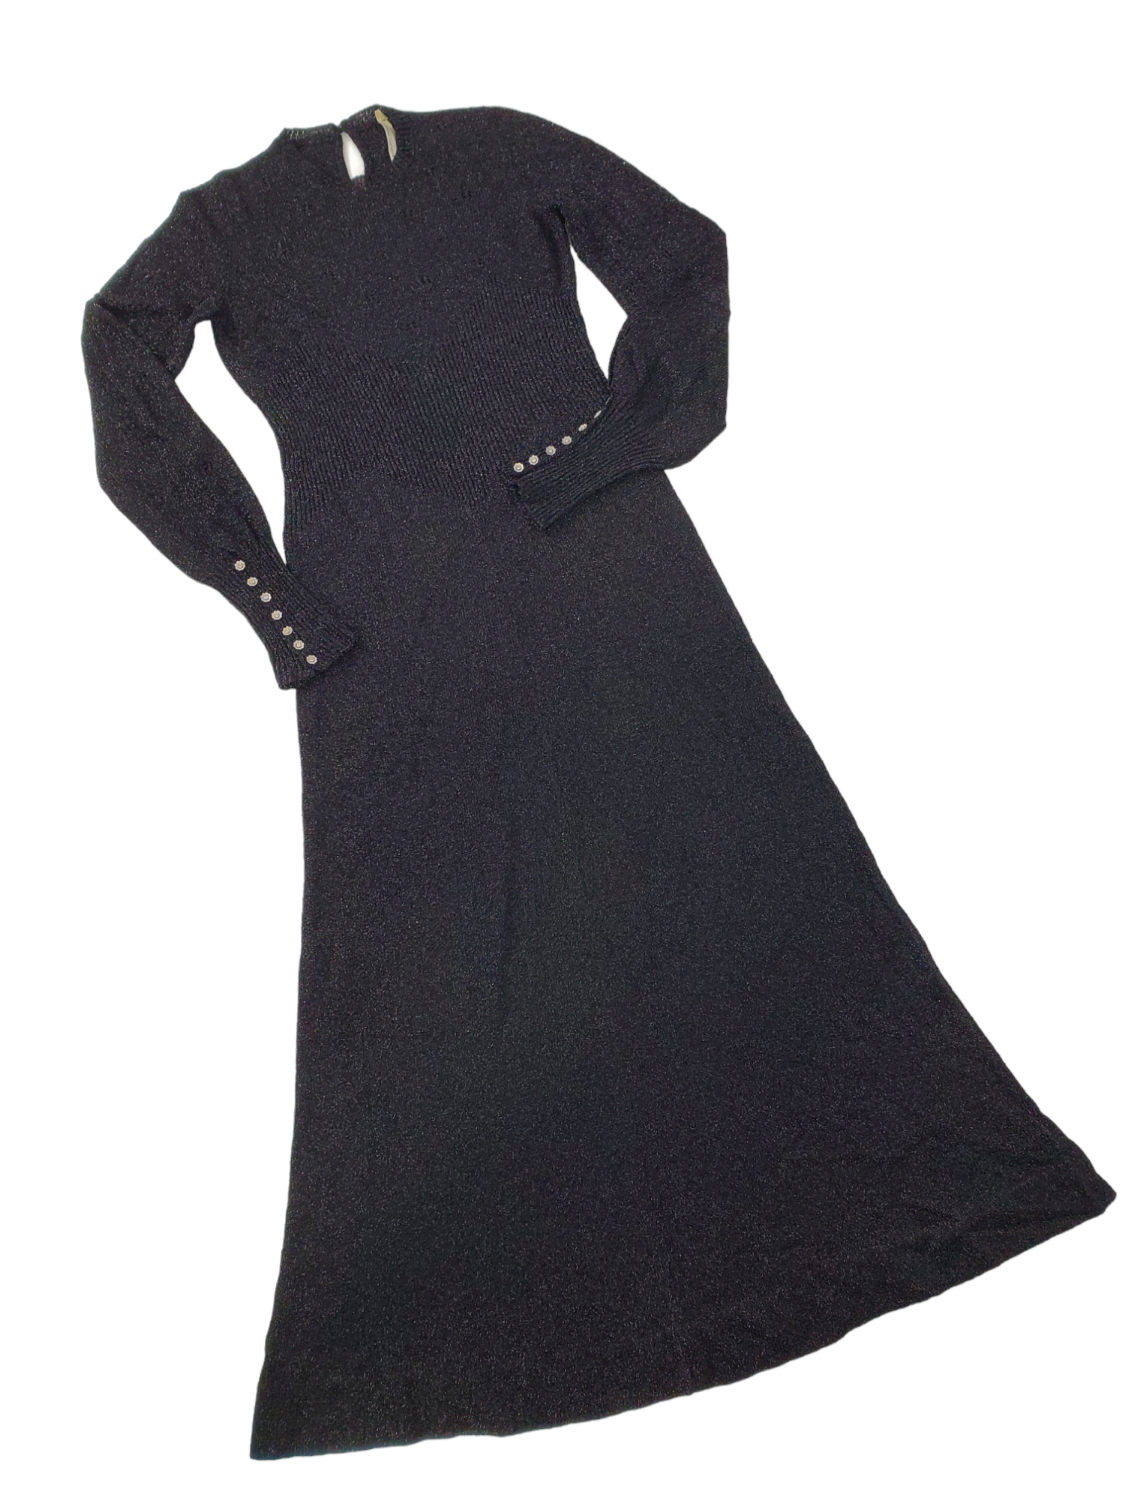 60s/70s Black Metallic Pointelle Knit Maxi Dress - sm, med – Better Dresses  Vintage